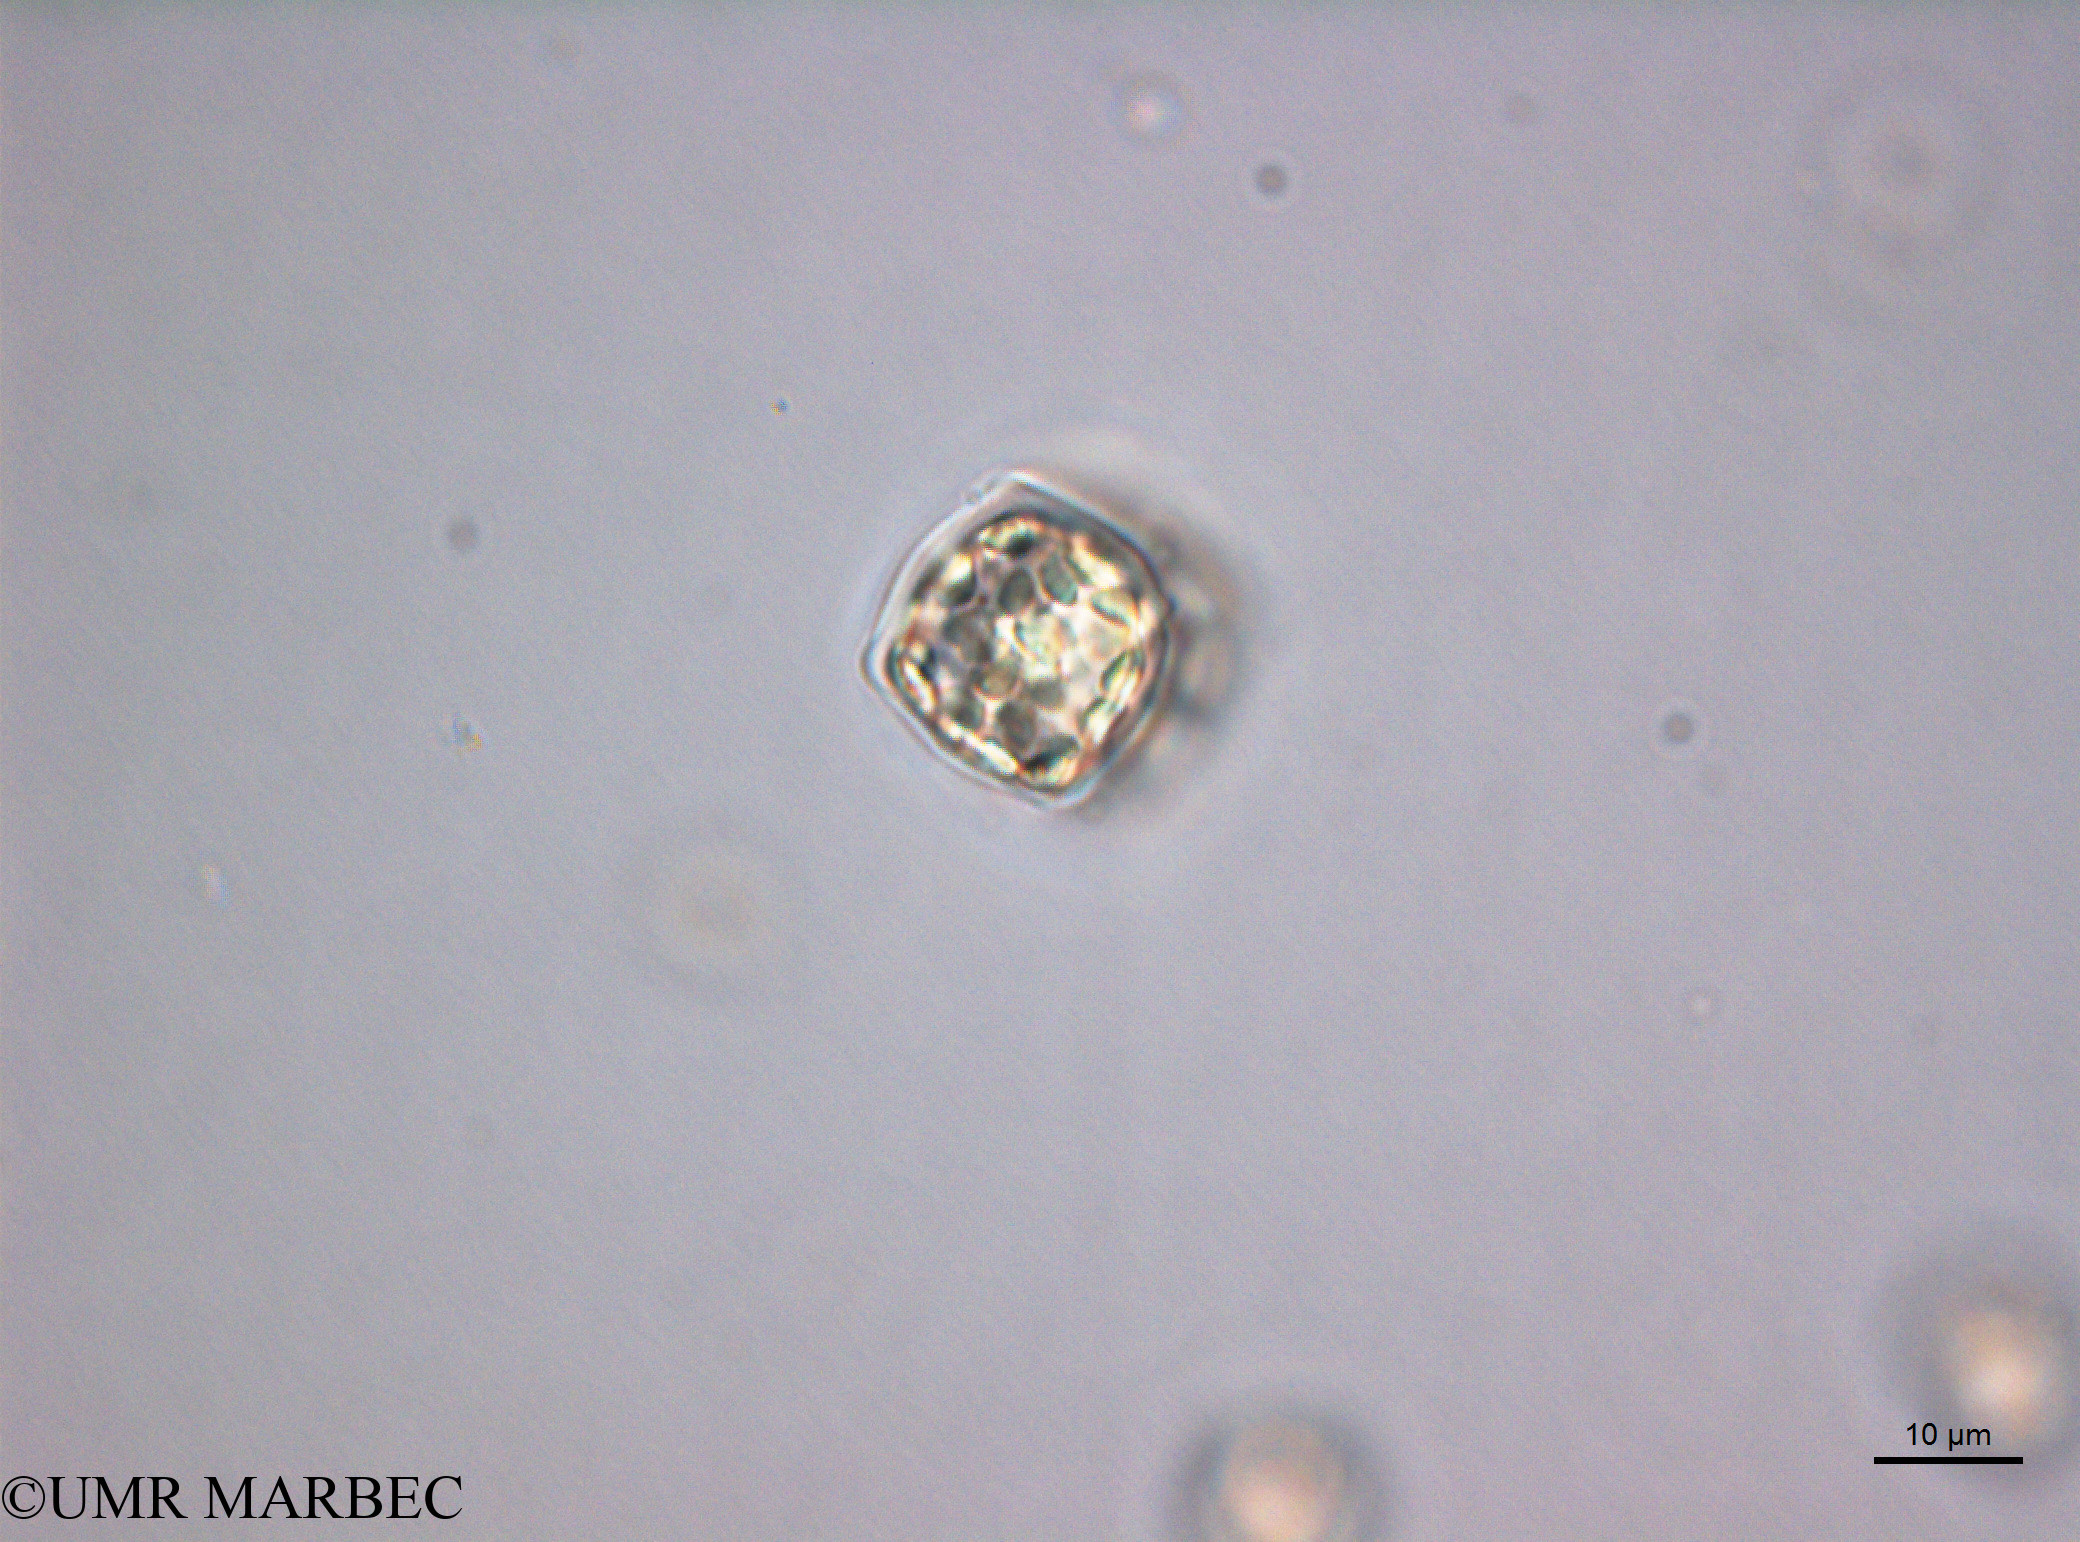 phyto/Scattered_Islands/juan_de_nova/COMMA2 November 2013/Cerataulina sp1 (D5_2_diatomee_ancien_melosira180717_001_ovl-30)(copy).jpg